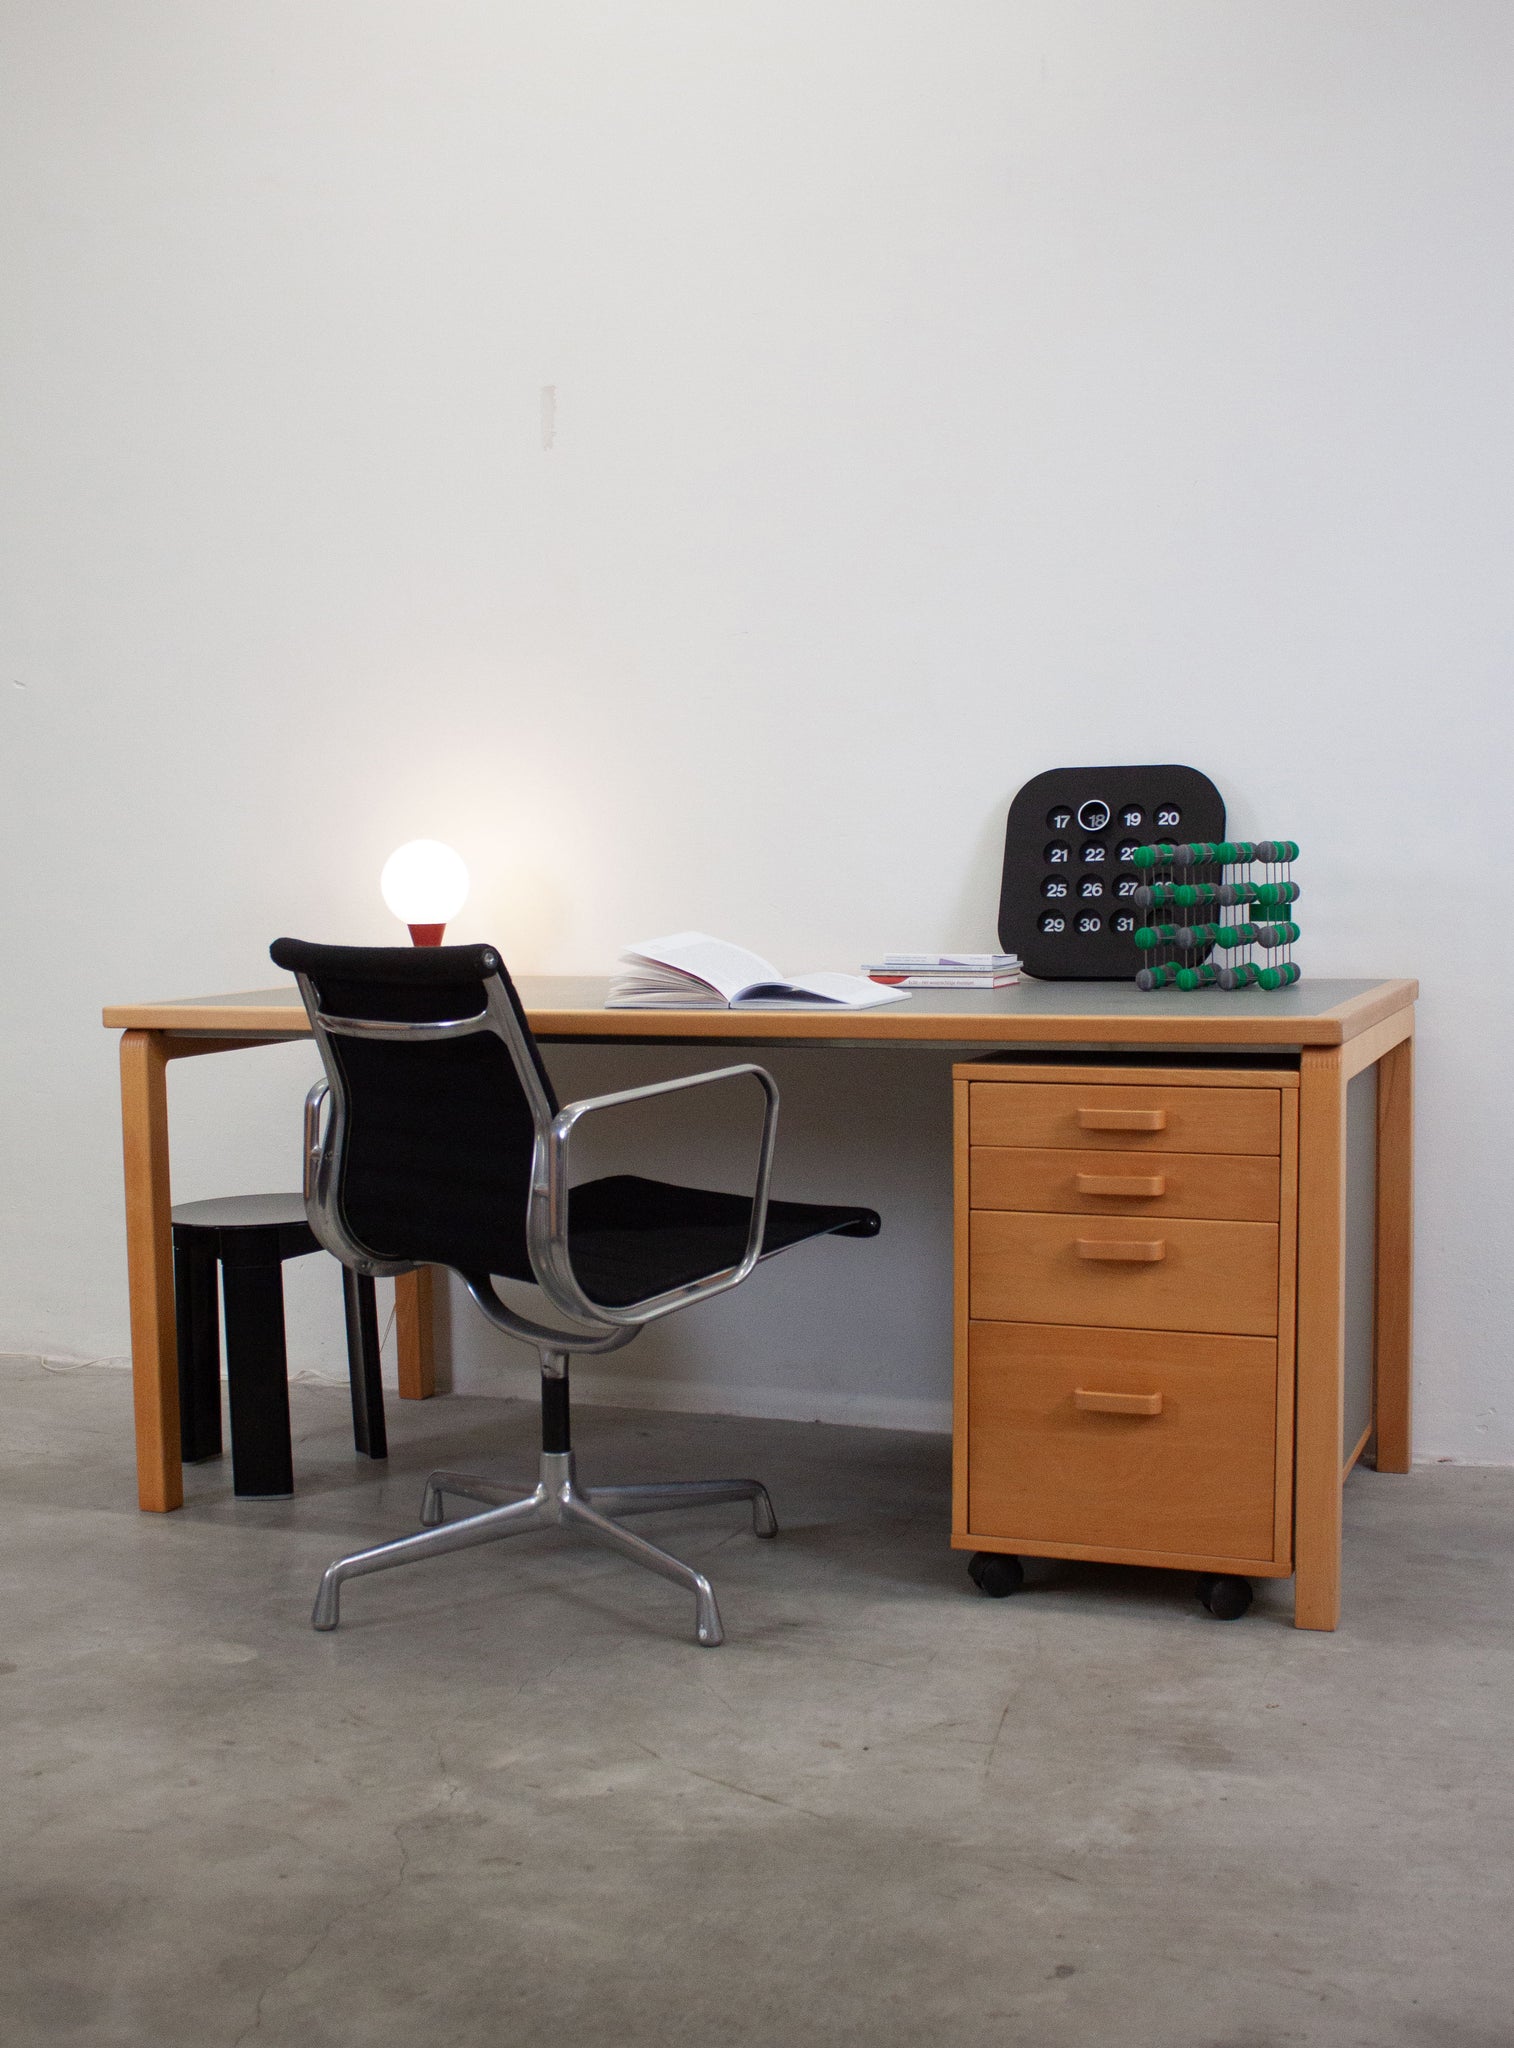 Vintage Writing Desk in style of Magnus Olesen (Grey)